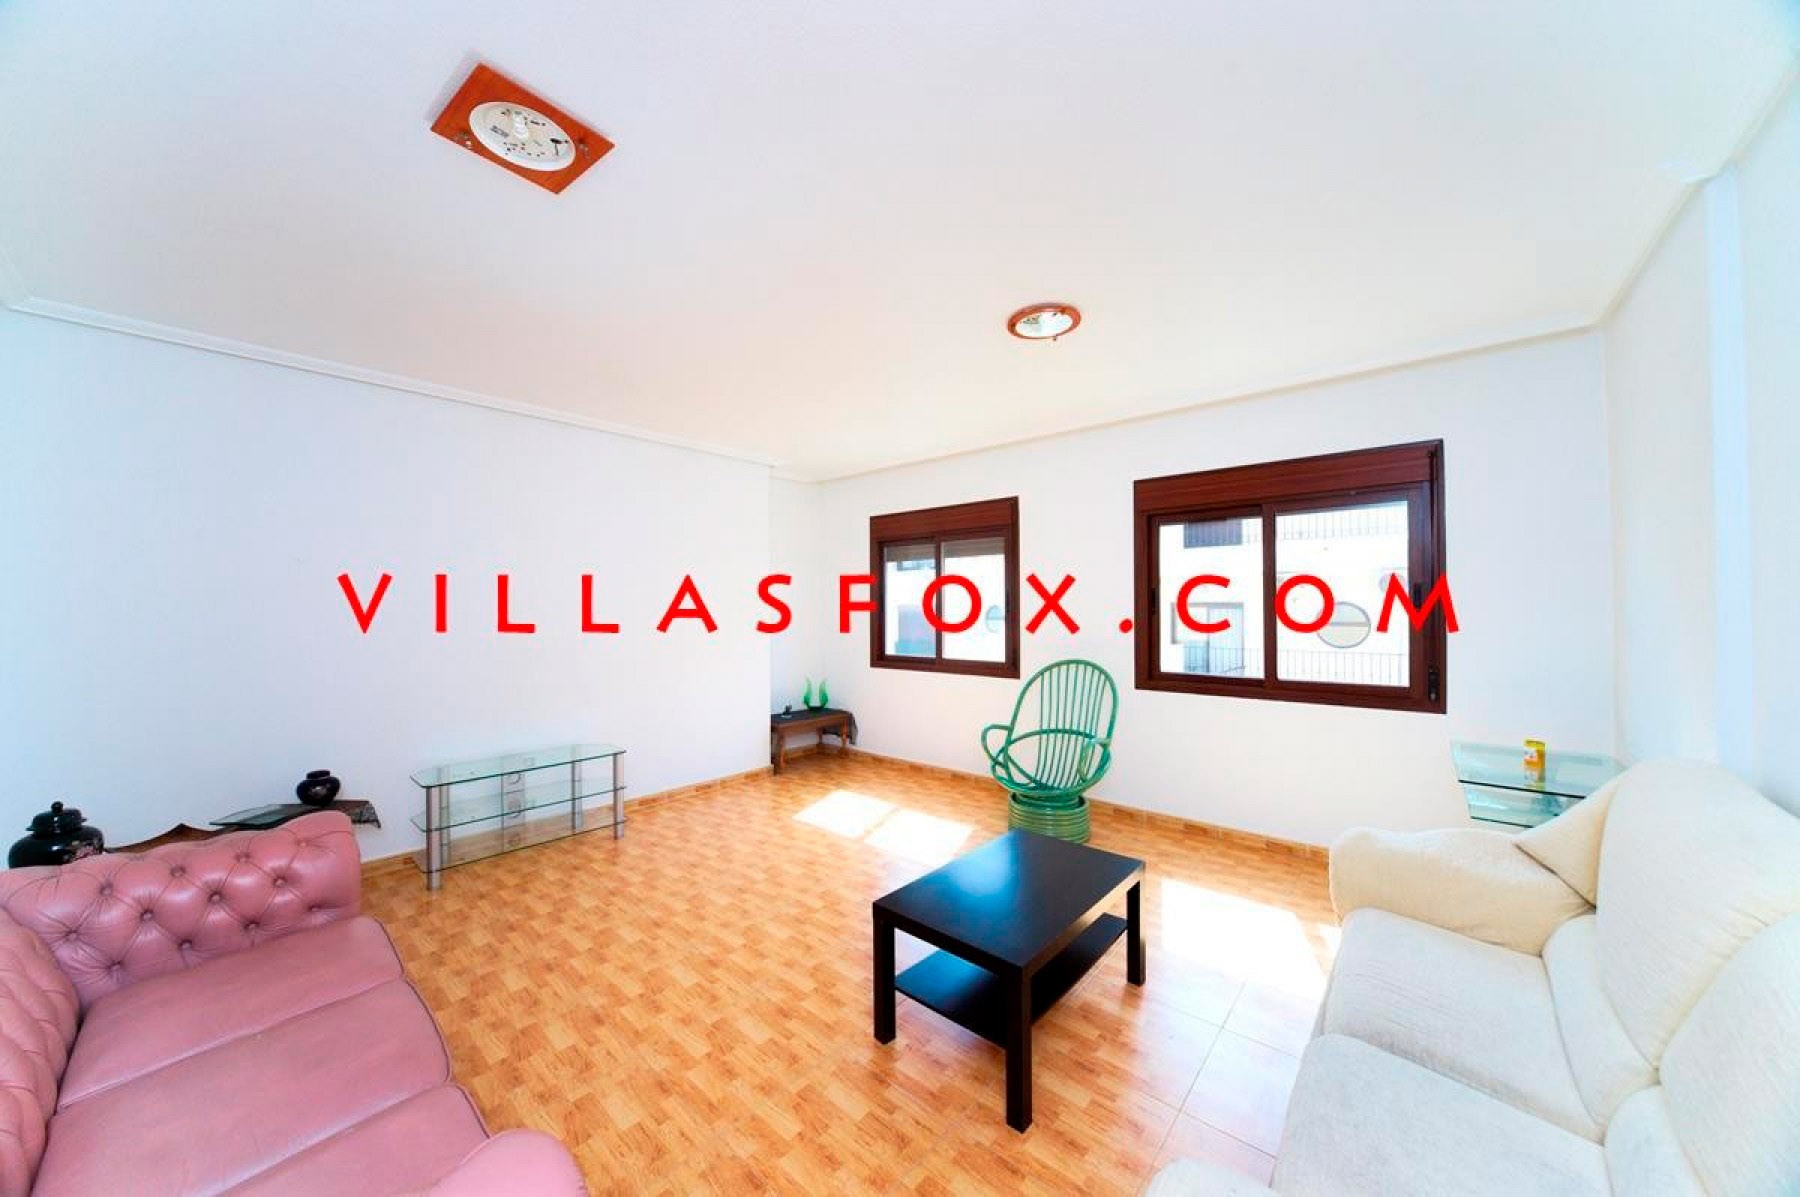 28704, 2-bedroom spacious 1st-floor apartment, San Miguel de Salinas with optional garage space